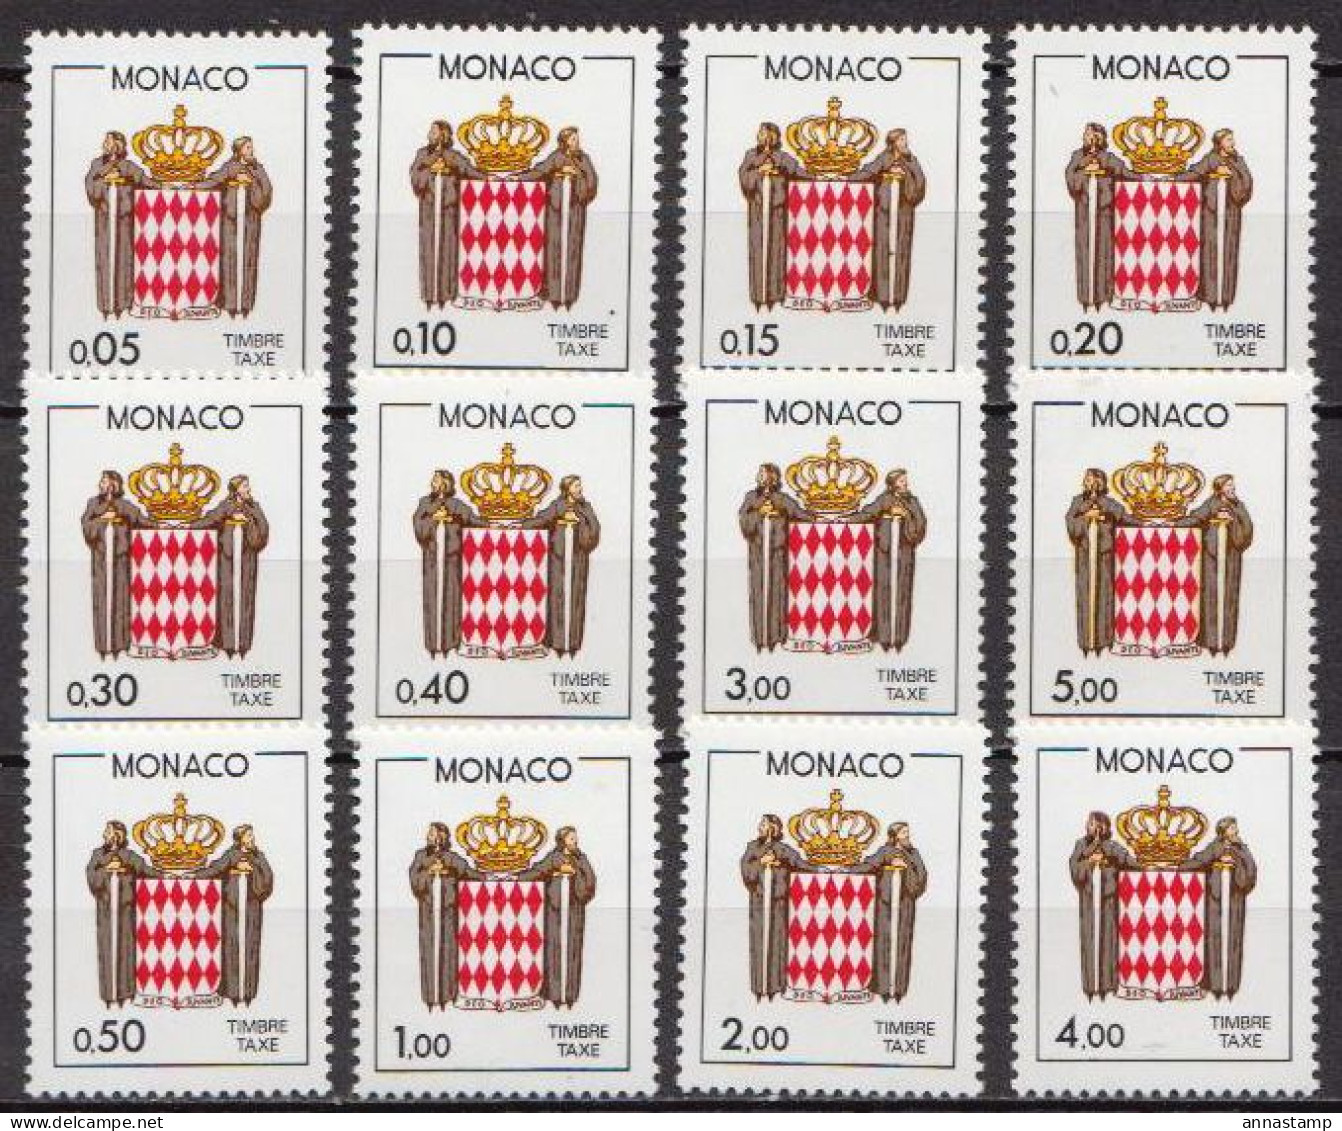 Monaco MNH Set - Stamps